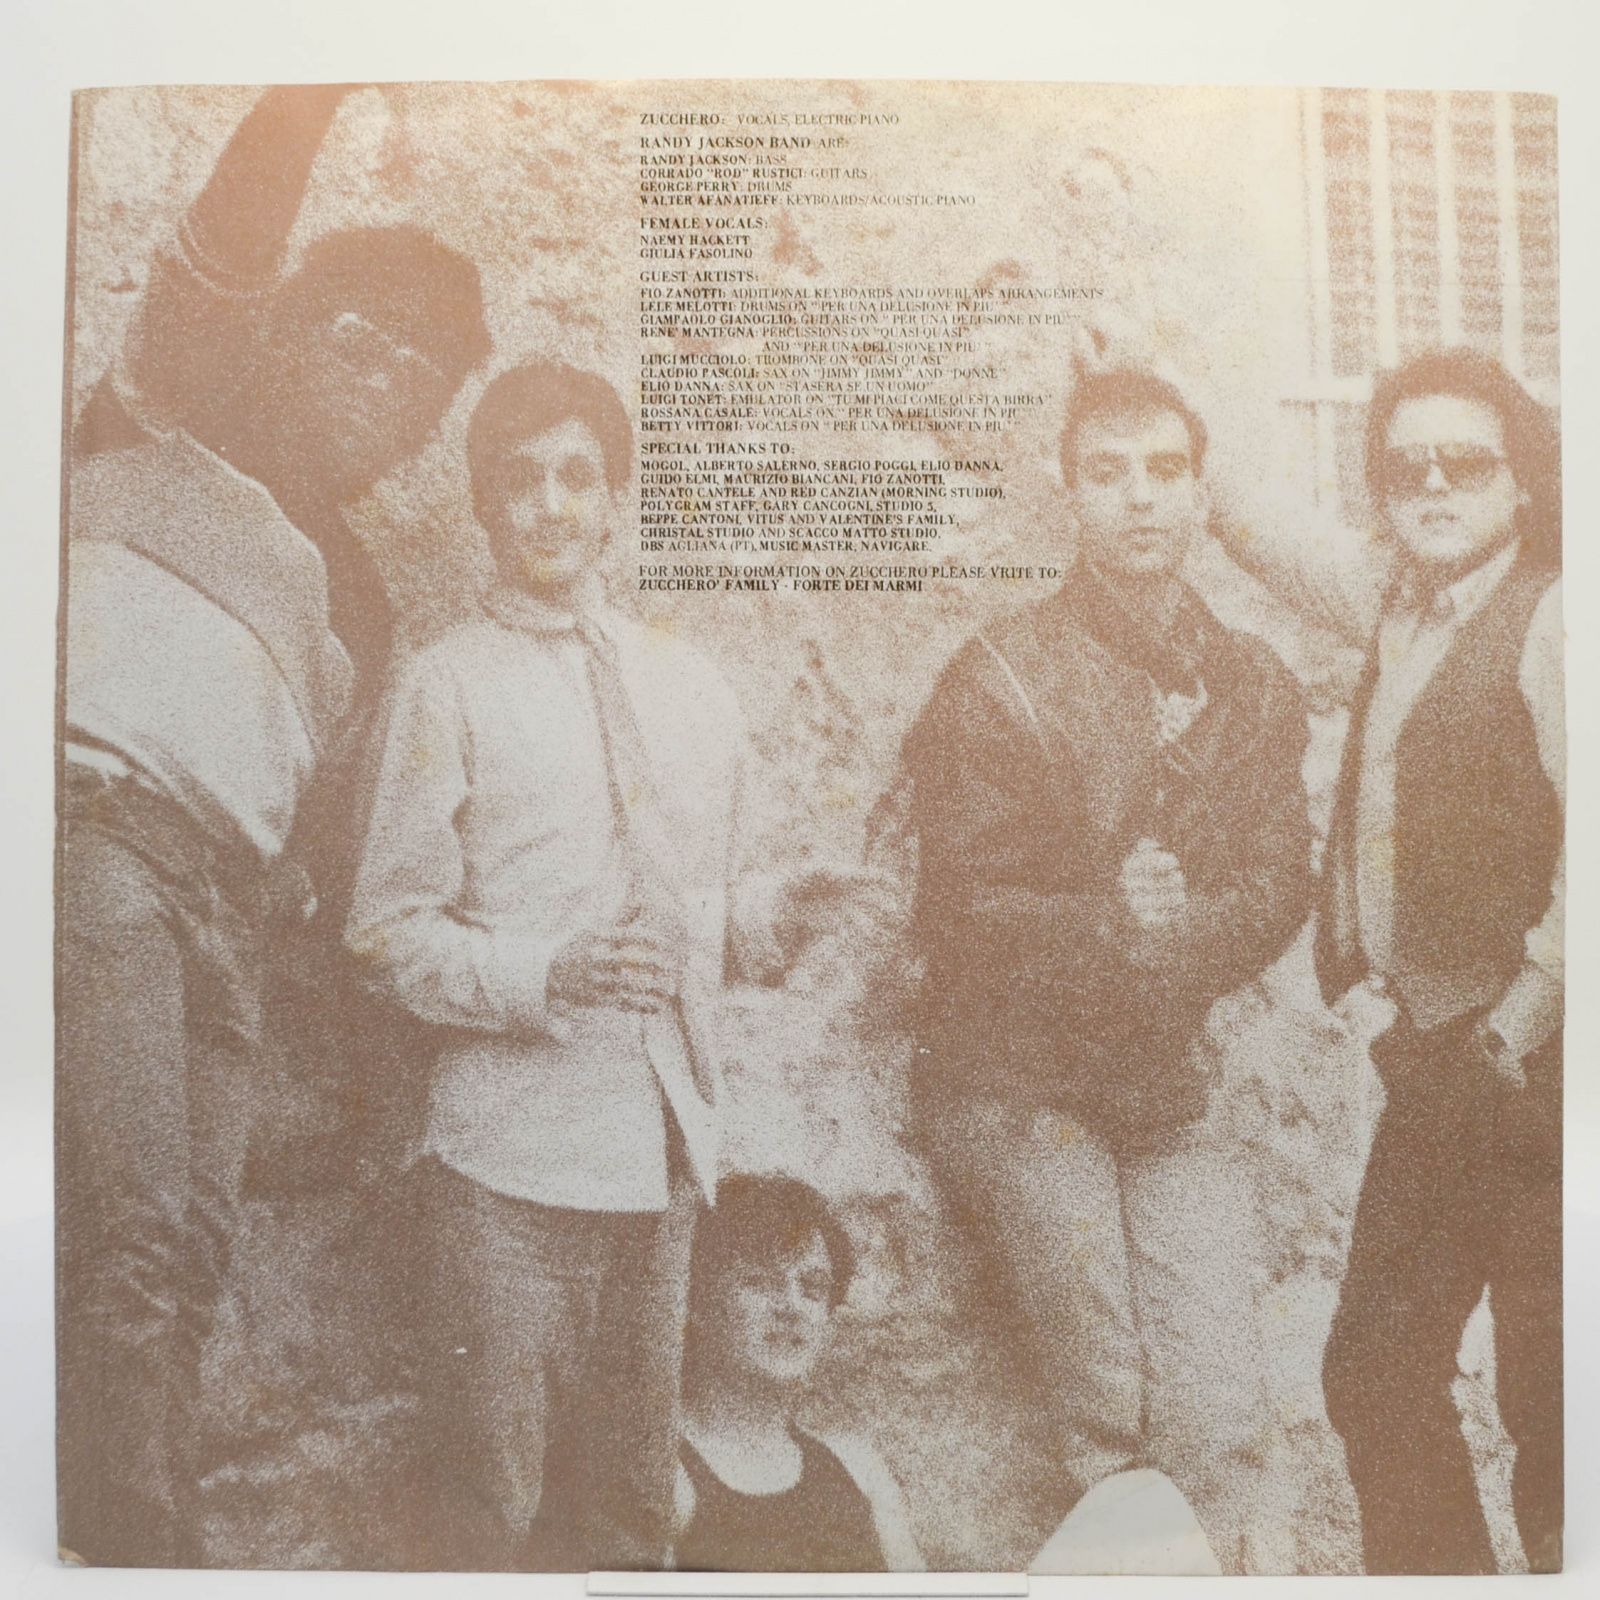 Zucchero & The Randy Jackson Band — Zucchero & The Randy Jackson Band, 1985